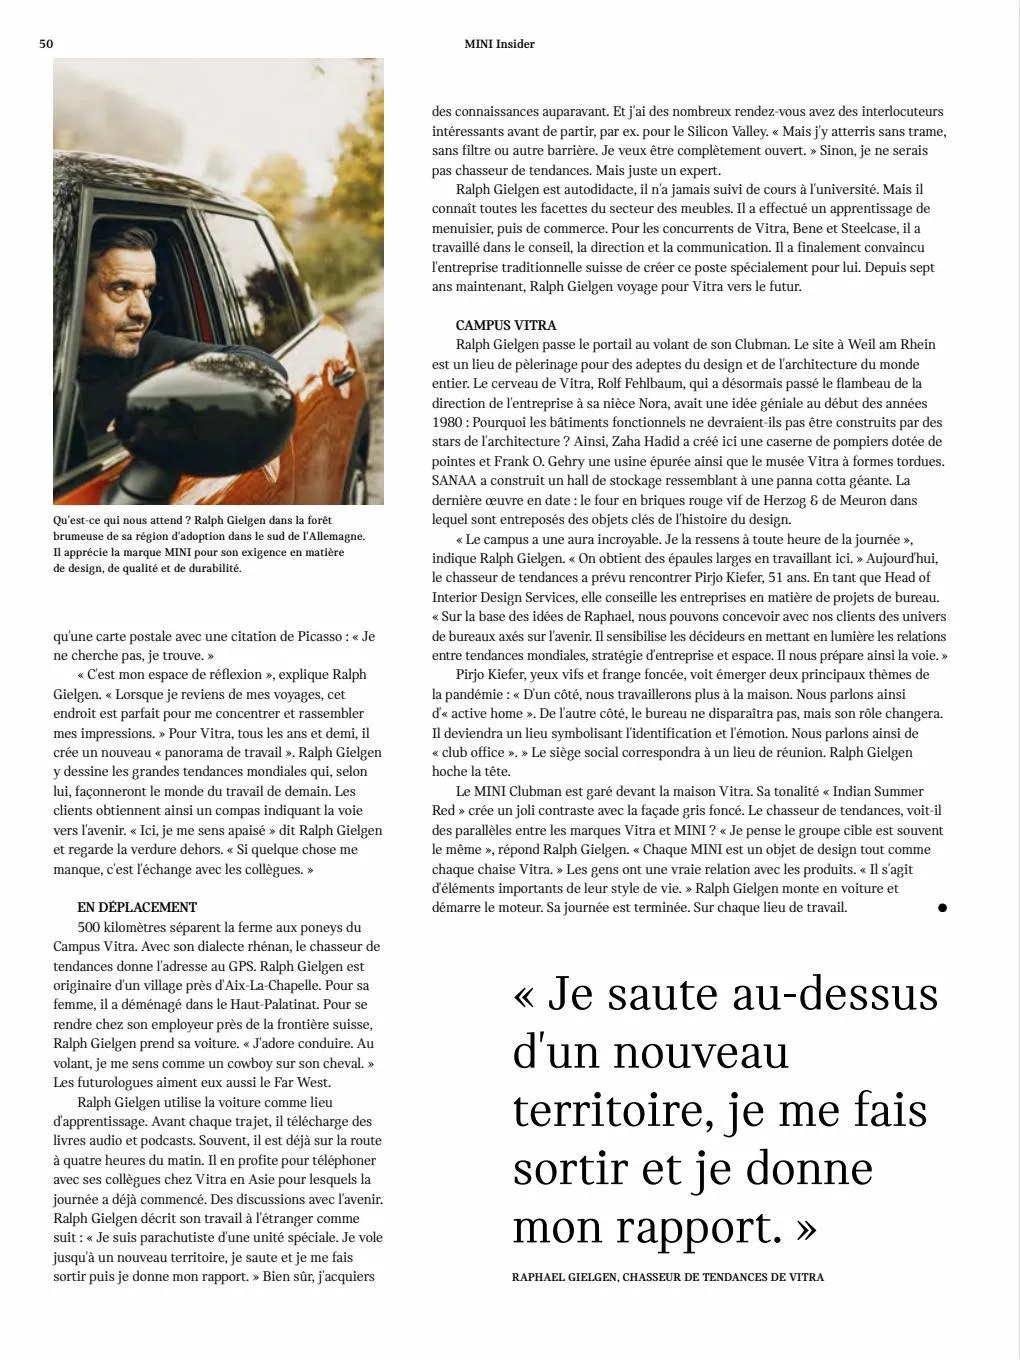 Catalogue Magazine MINI Insider., page 00050